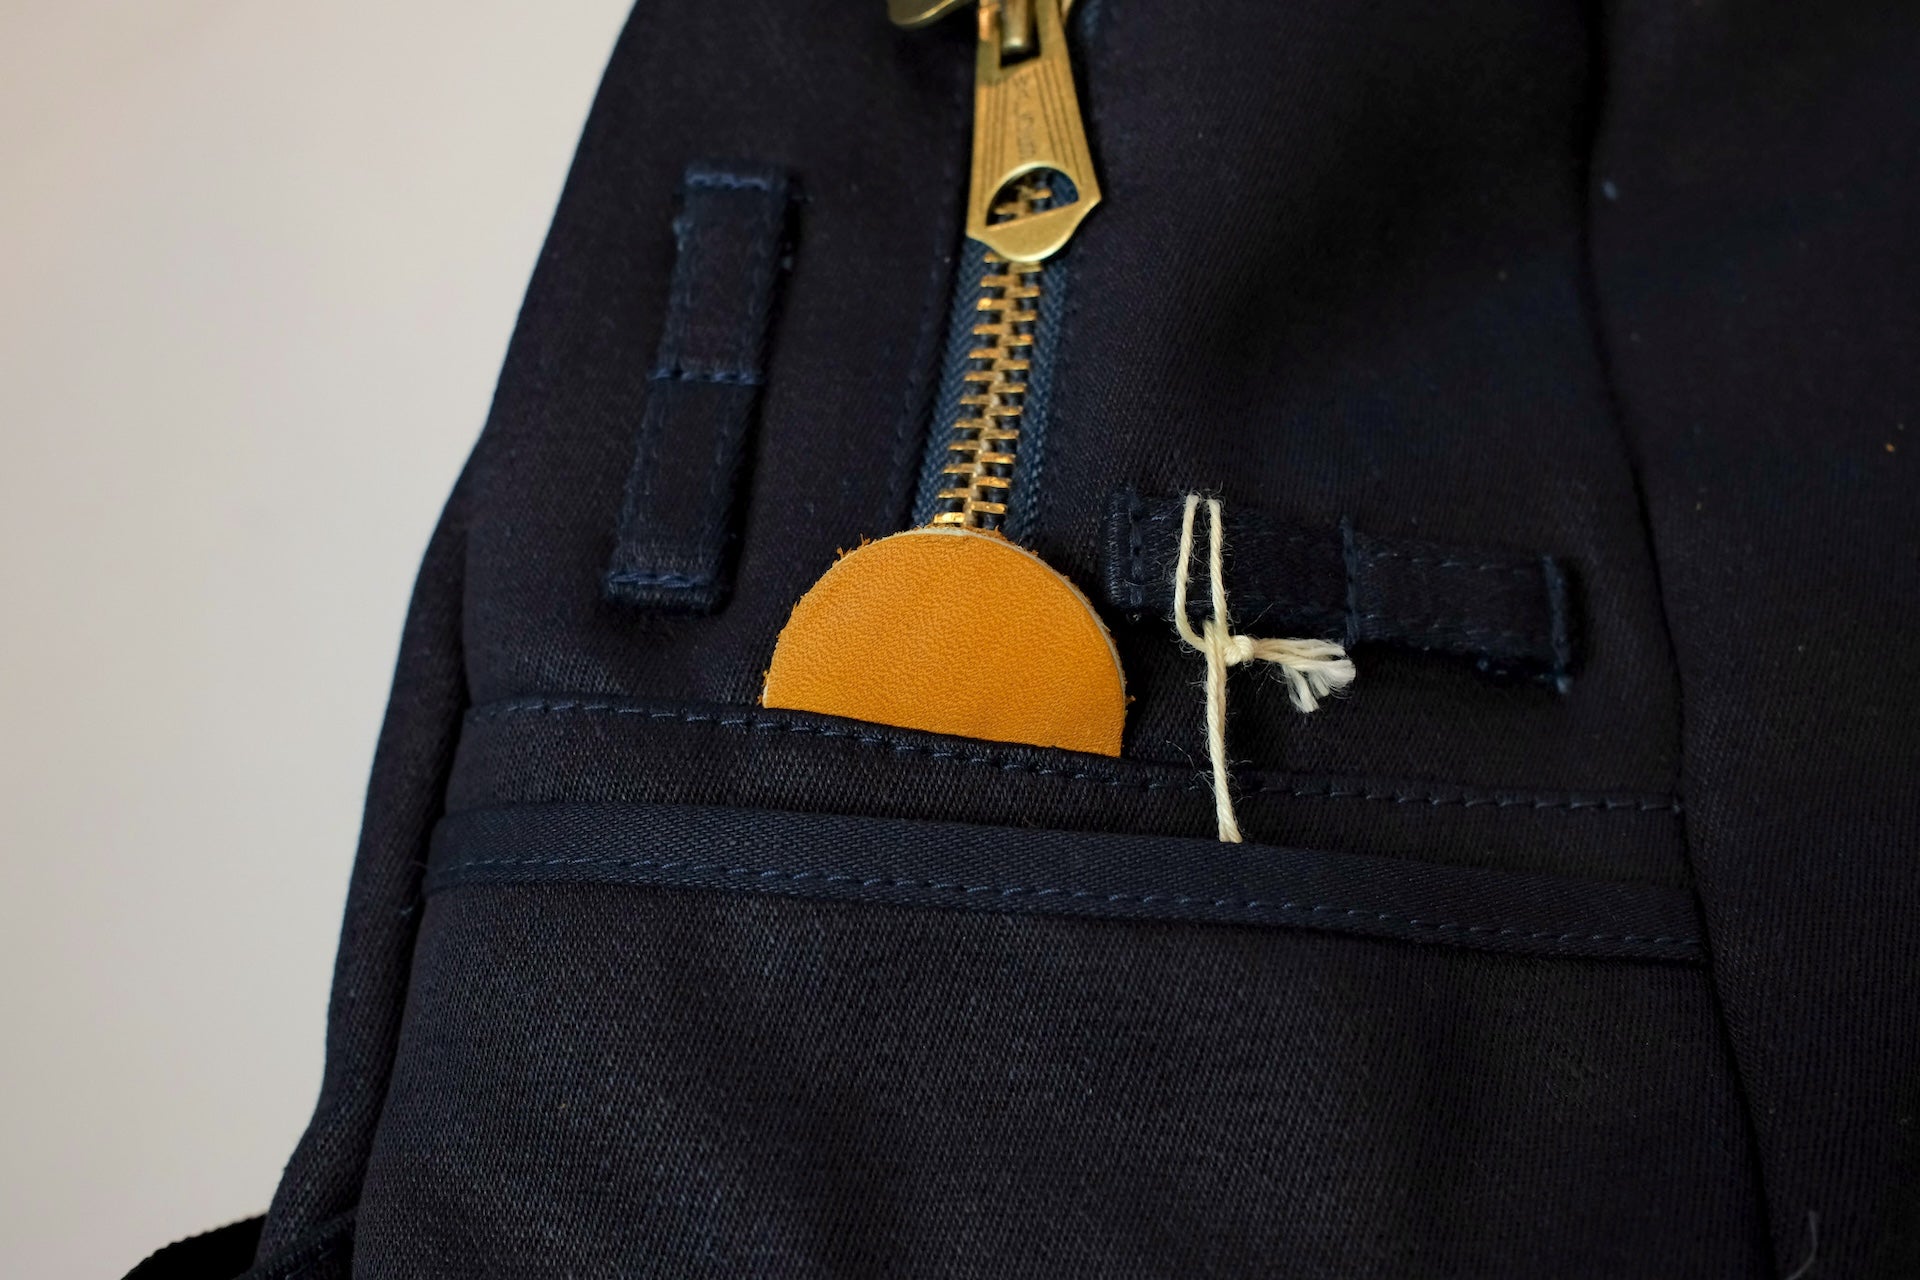 UES "Multi-functional" Day Backpack (Indigo Denim)